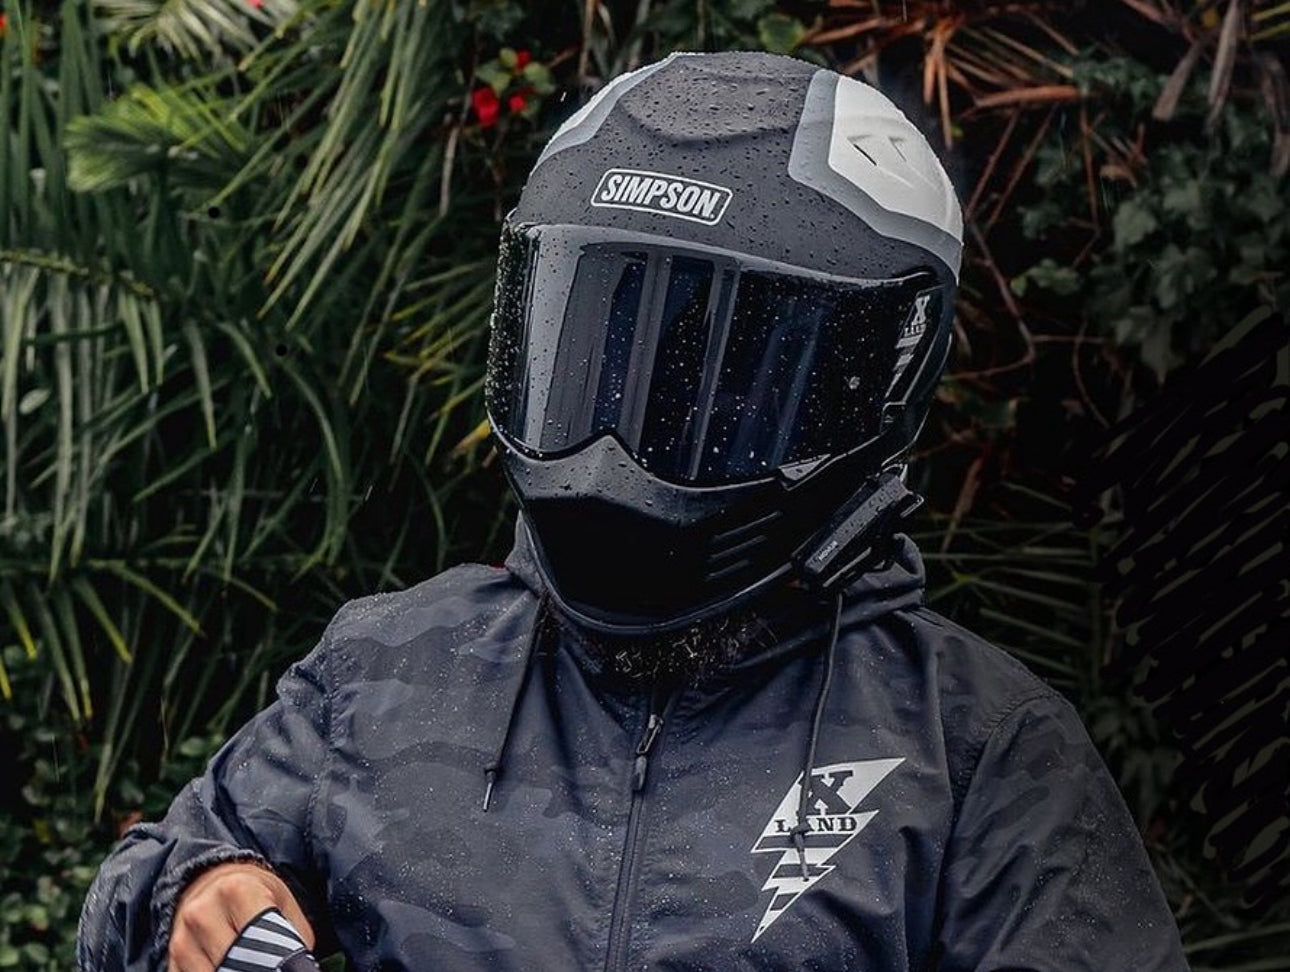 Simpson Limited Edition Ghost Bandit Helmet